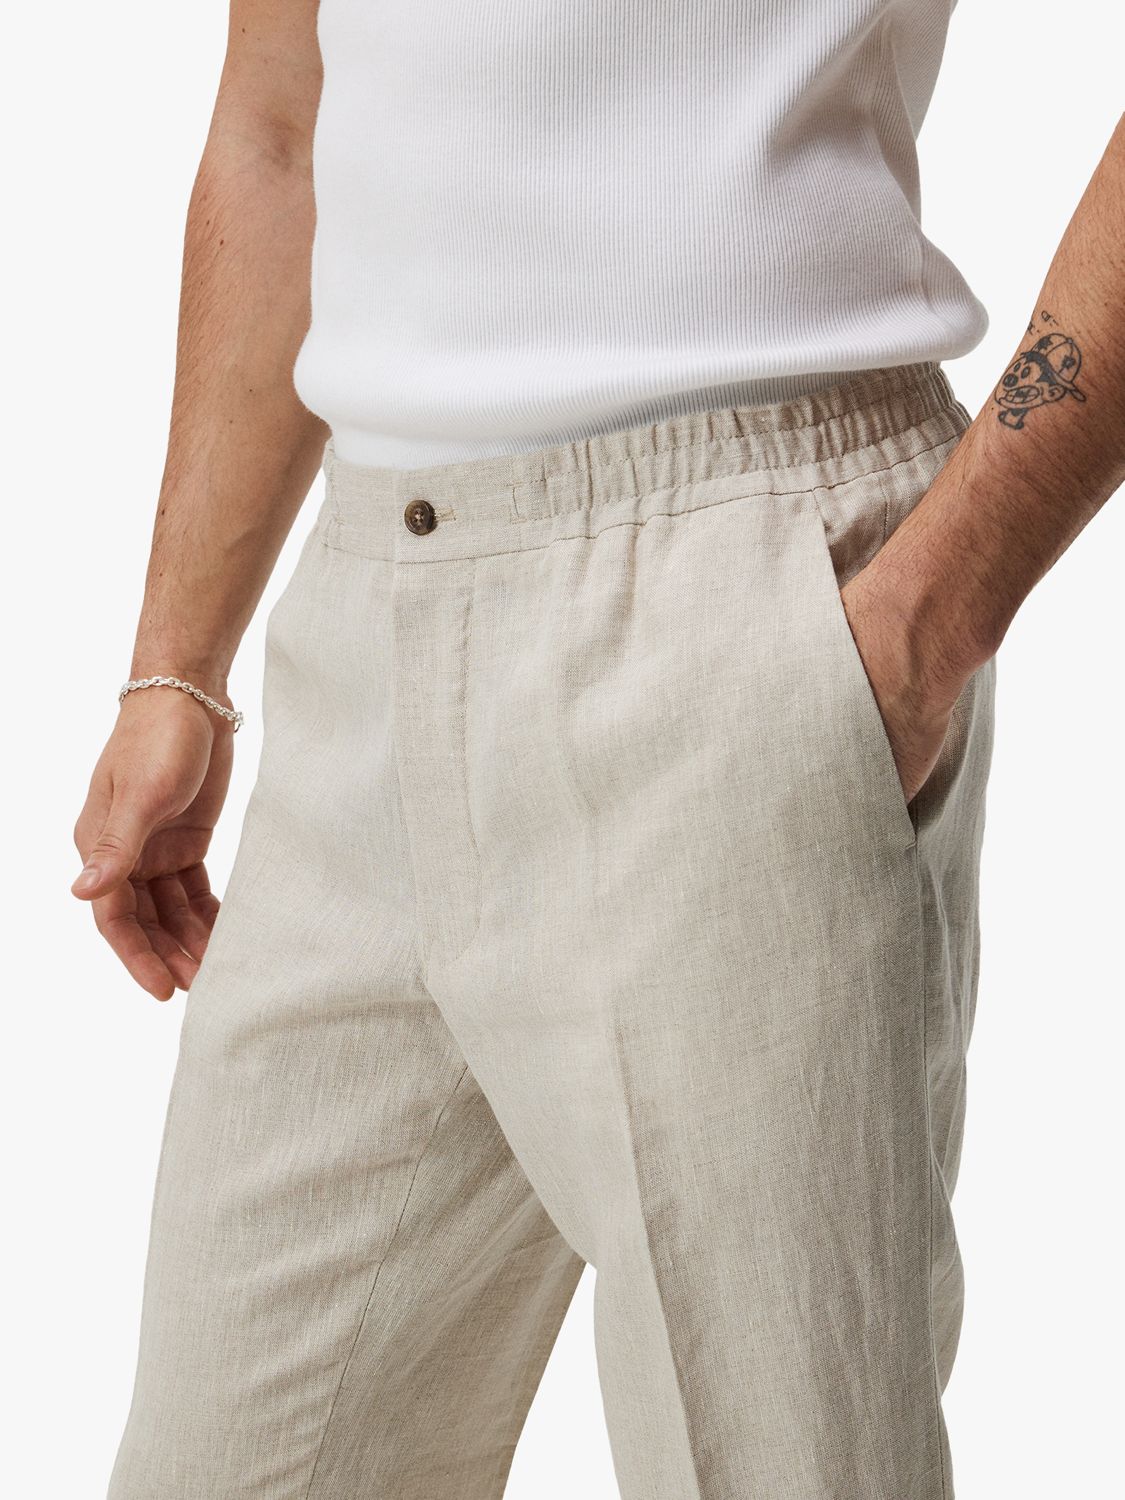 J.Lindeberg Soren Linen Trousers, Safari Beige, 30R